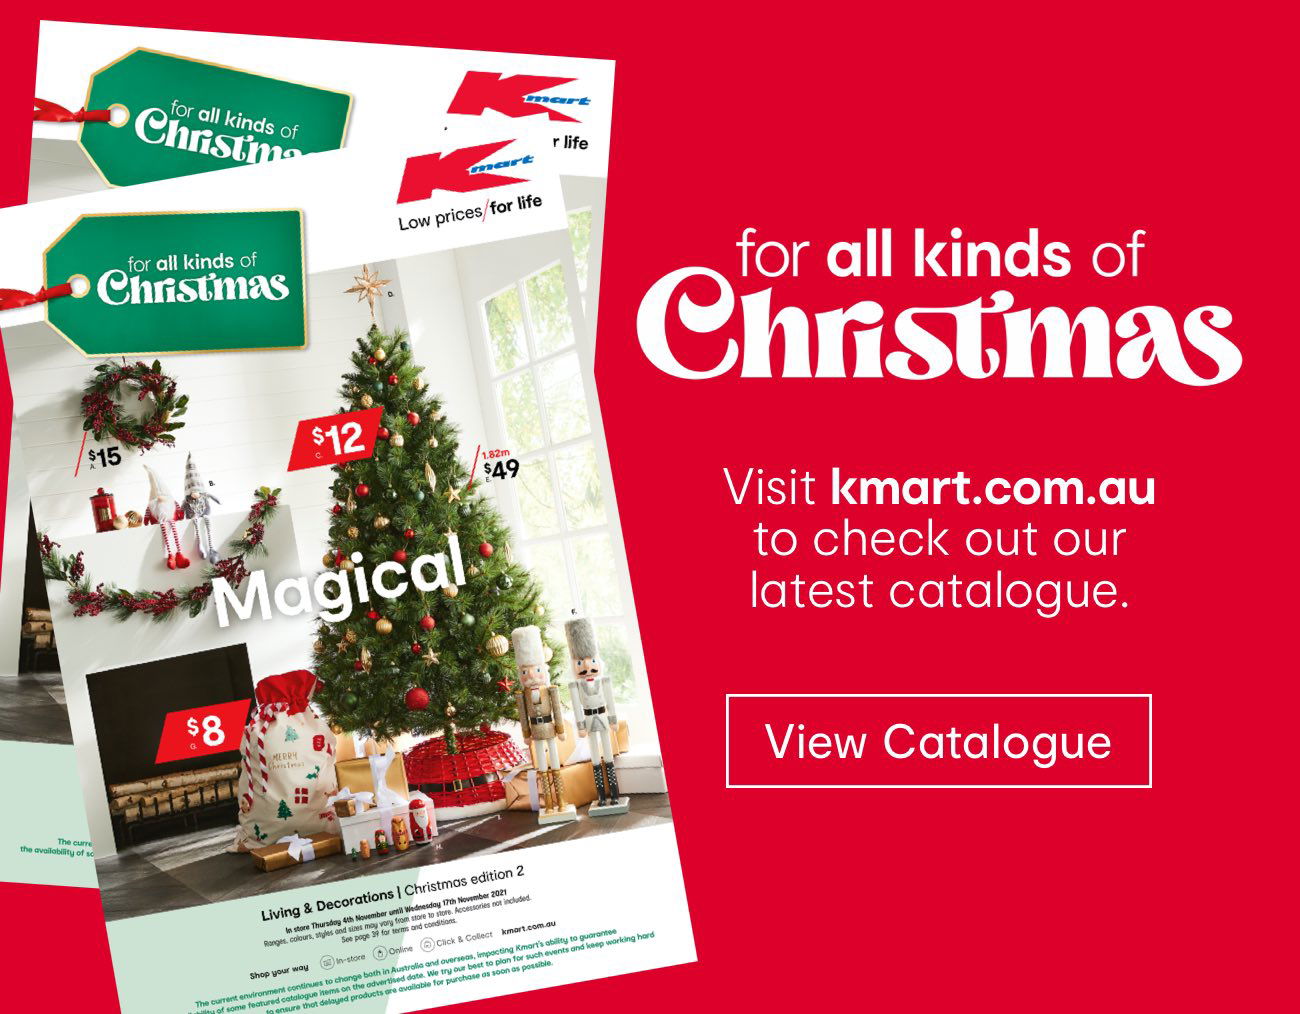 Um, Kmart knows it's Summer at Christmas in Australia yeah? : r/australia